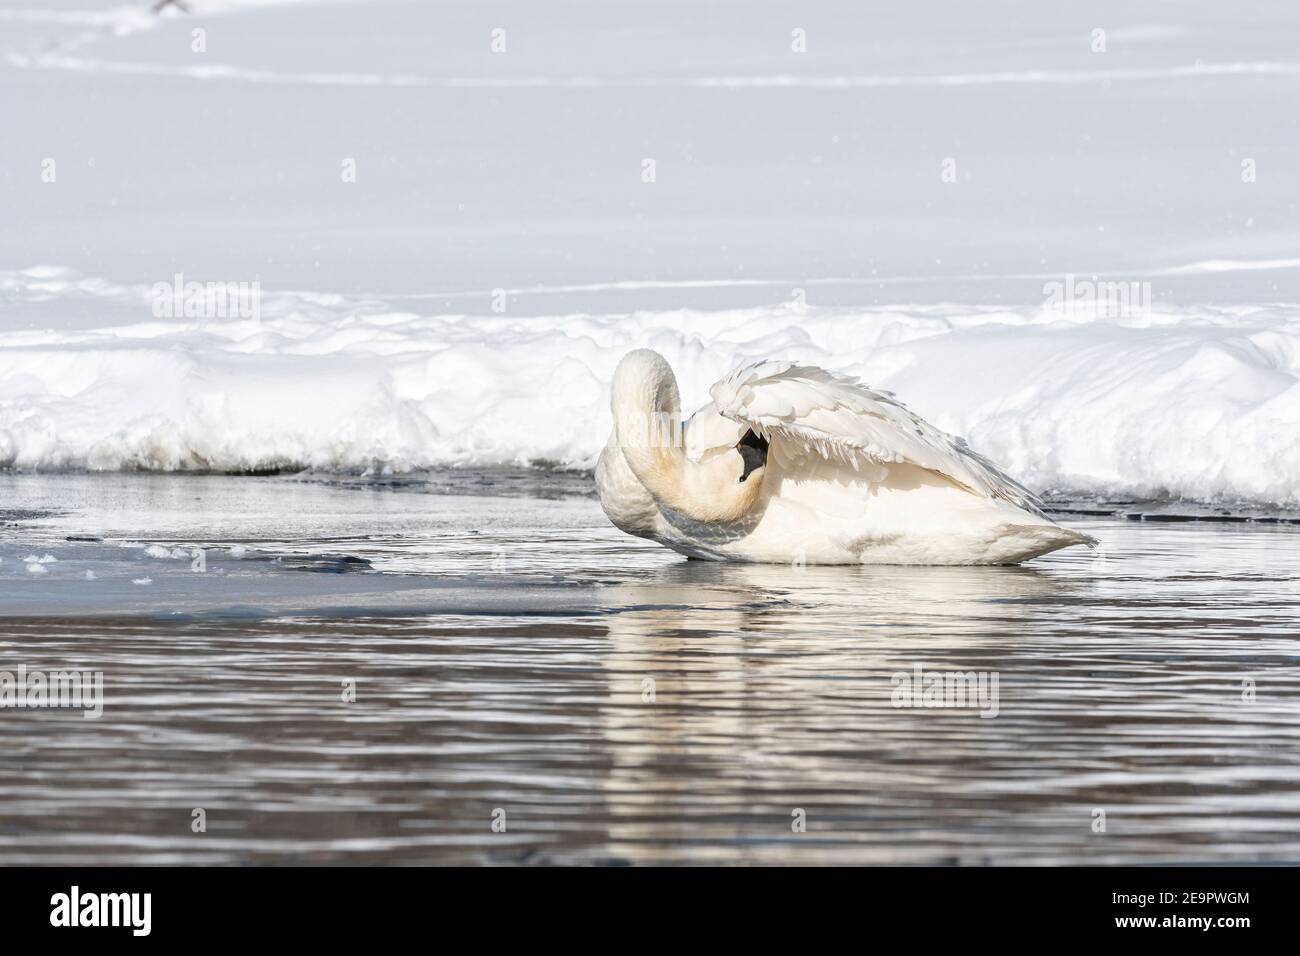 Tromba rana preening, fixing piume, (Cygnus buccinator), Inverno, fiume Mississippi, MN, USA, di Dominique Braud/Dembinsky Photo Assoc Foto Stock